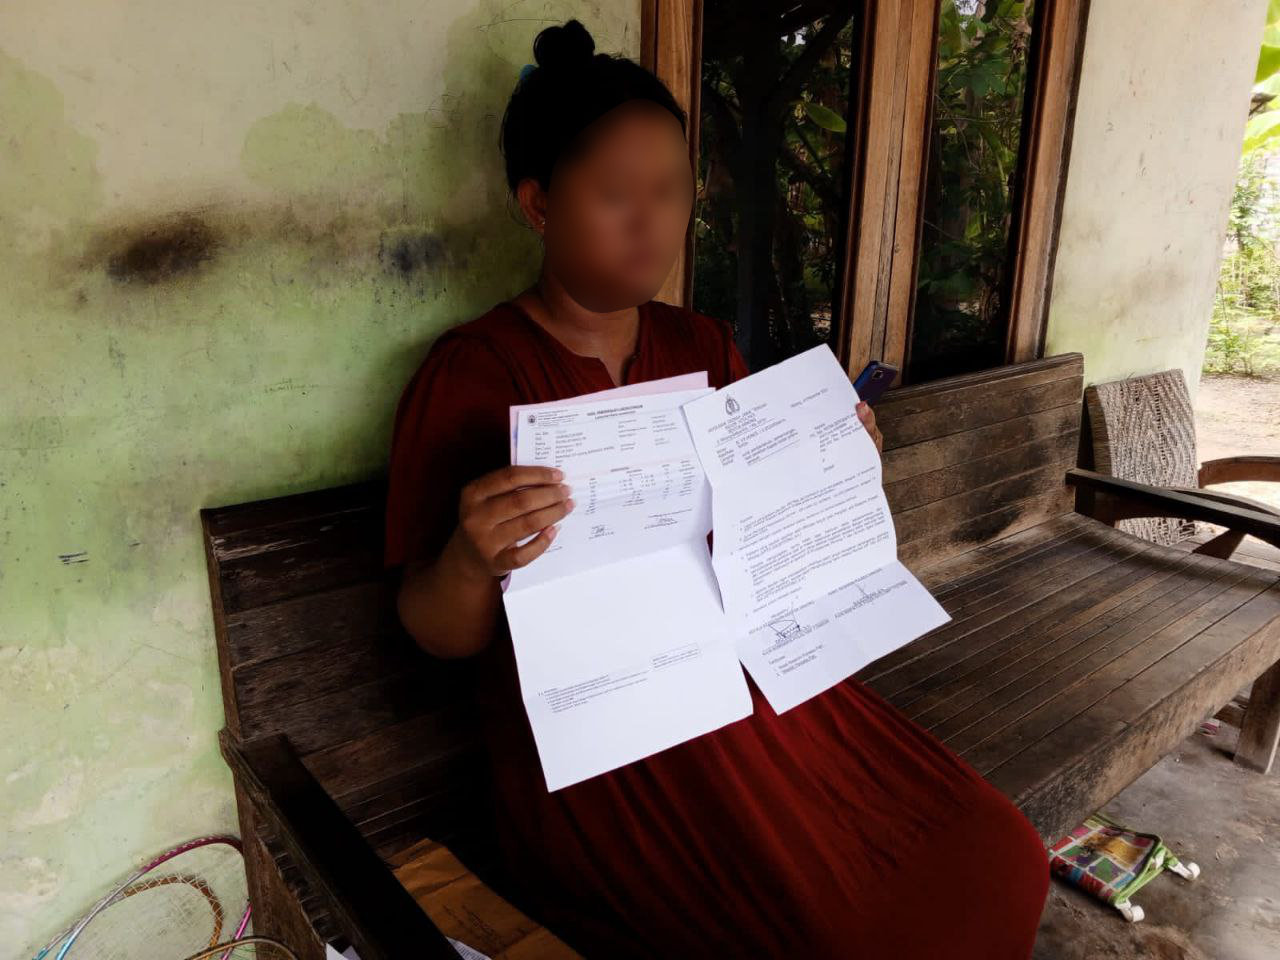 Foto : Wanita korban (RS) Desa Bumiharjo, Kecamatan Winong, Kabupaten Pati menunjukkan hasil laporan dan visum ke kepolisian (Sumber : Istimewa)